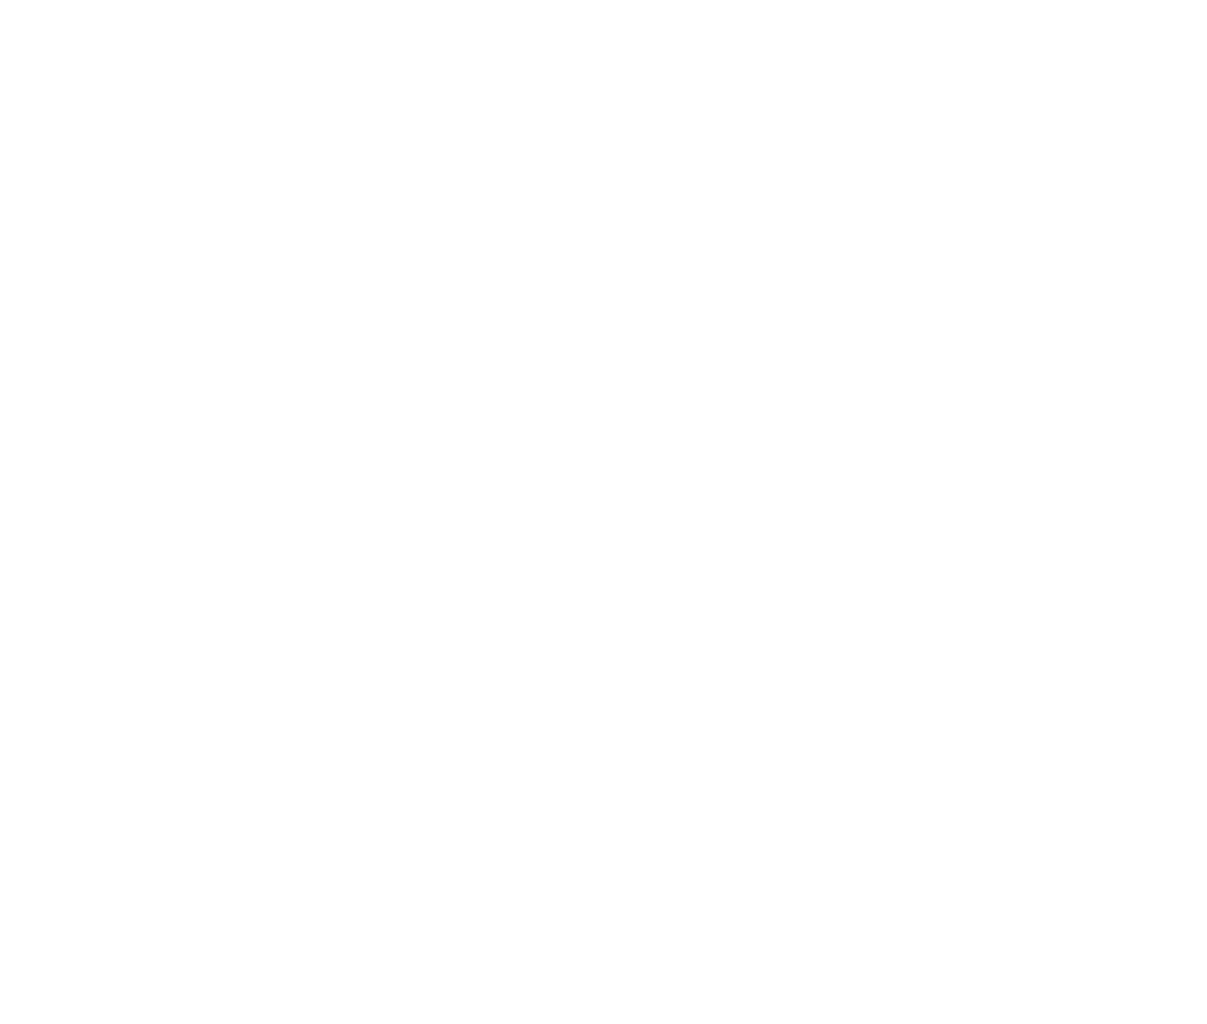 United Nations Embleem Logo Transparant Image